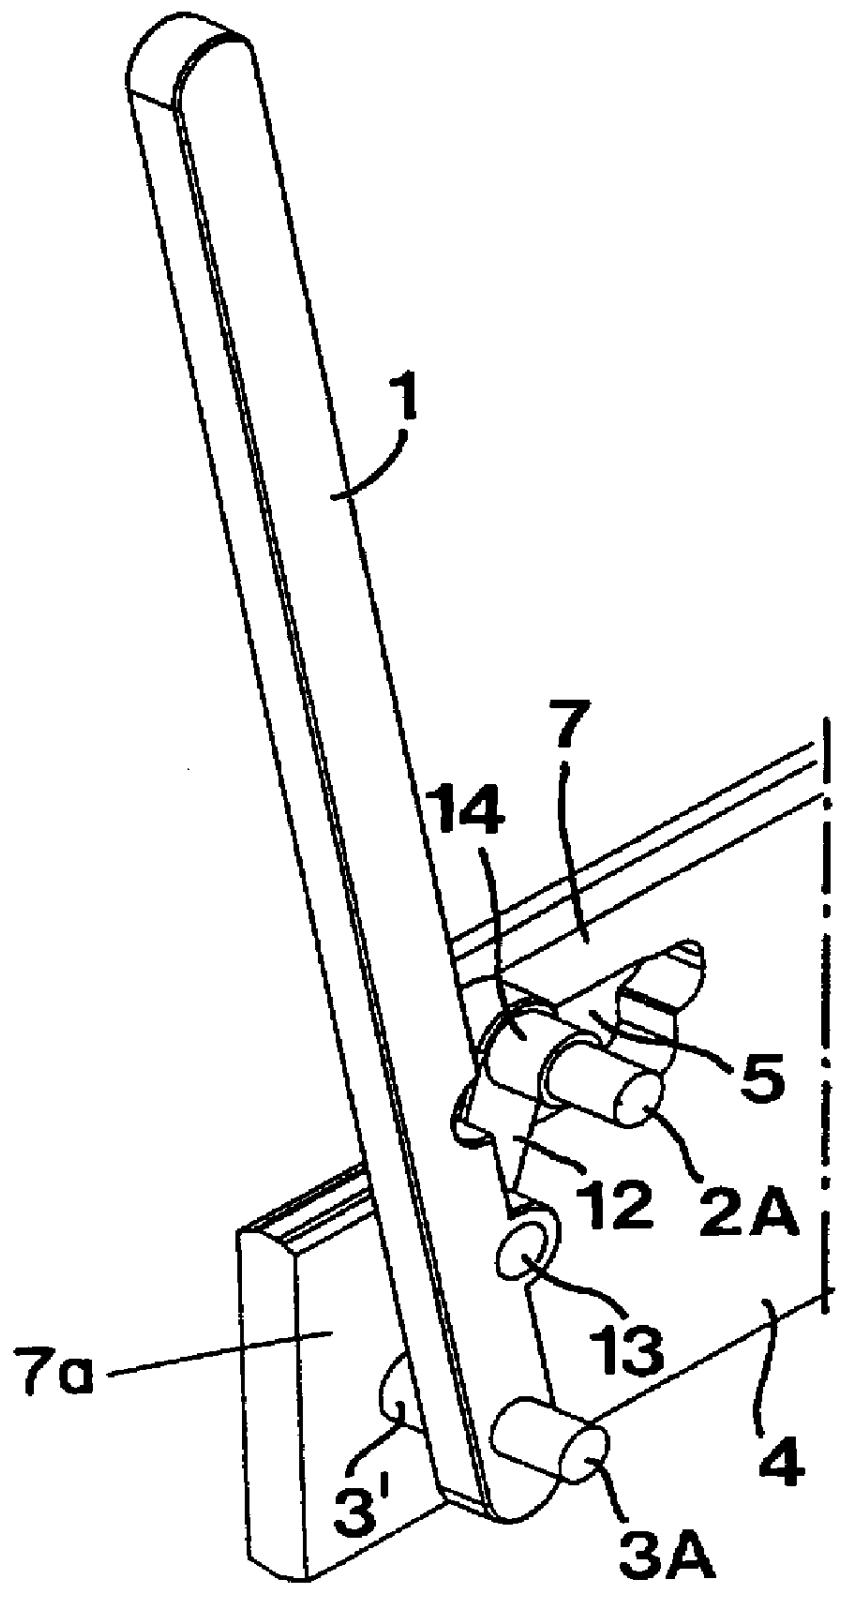 Key for insert holders of the blade type